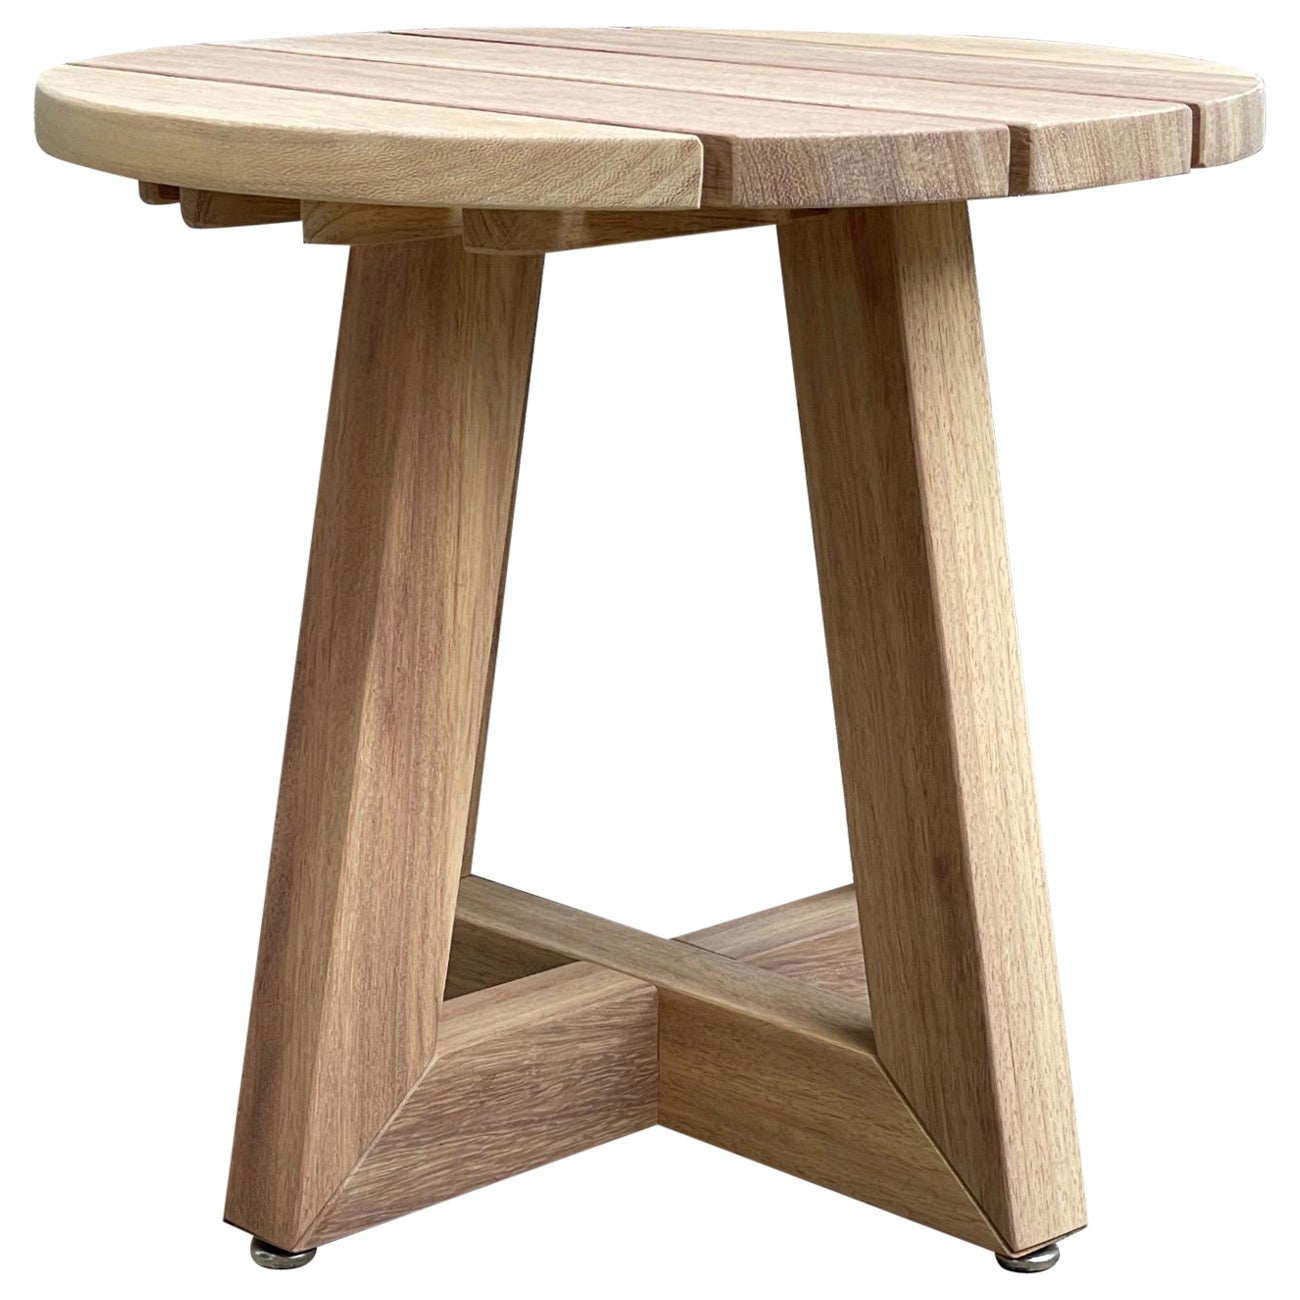 24” diameter teak outdoor side table